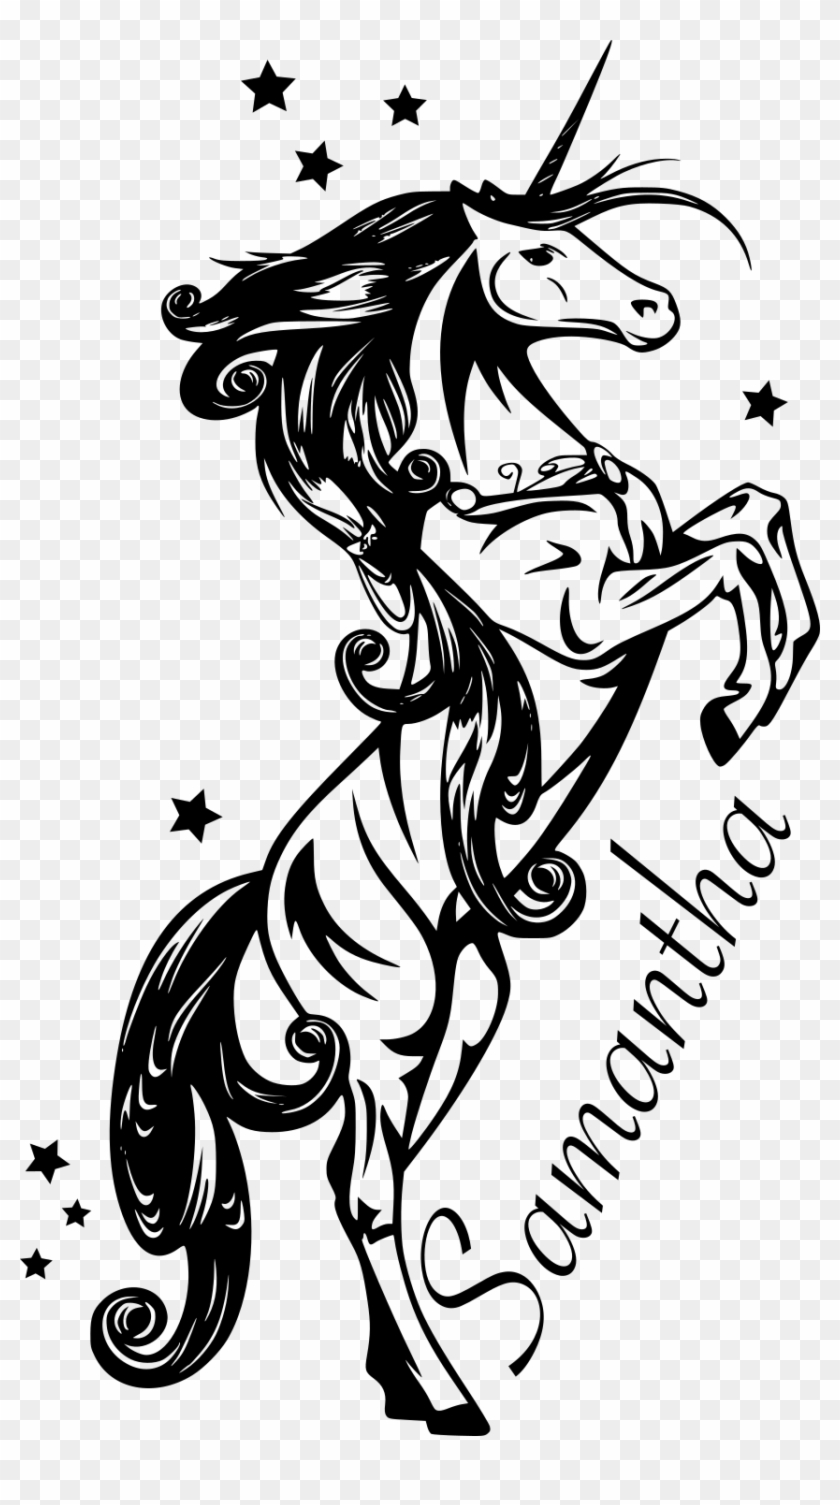 Sticker Sticker Unicorn To Customize 63cm X 110cm - Horse Svg #697265